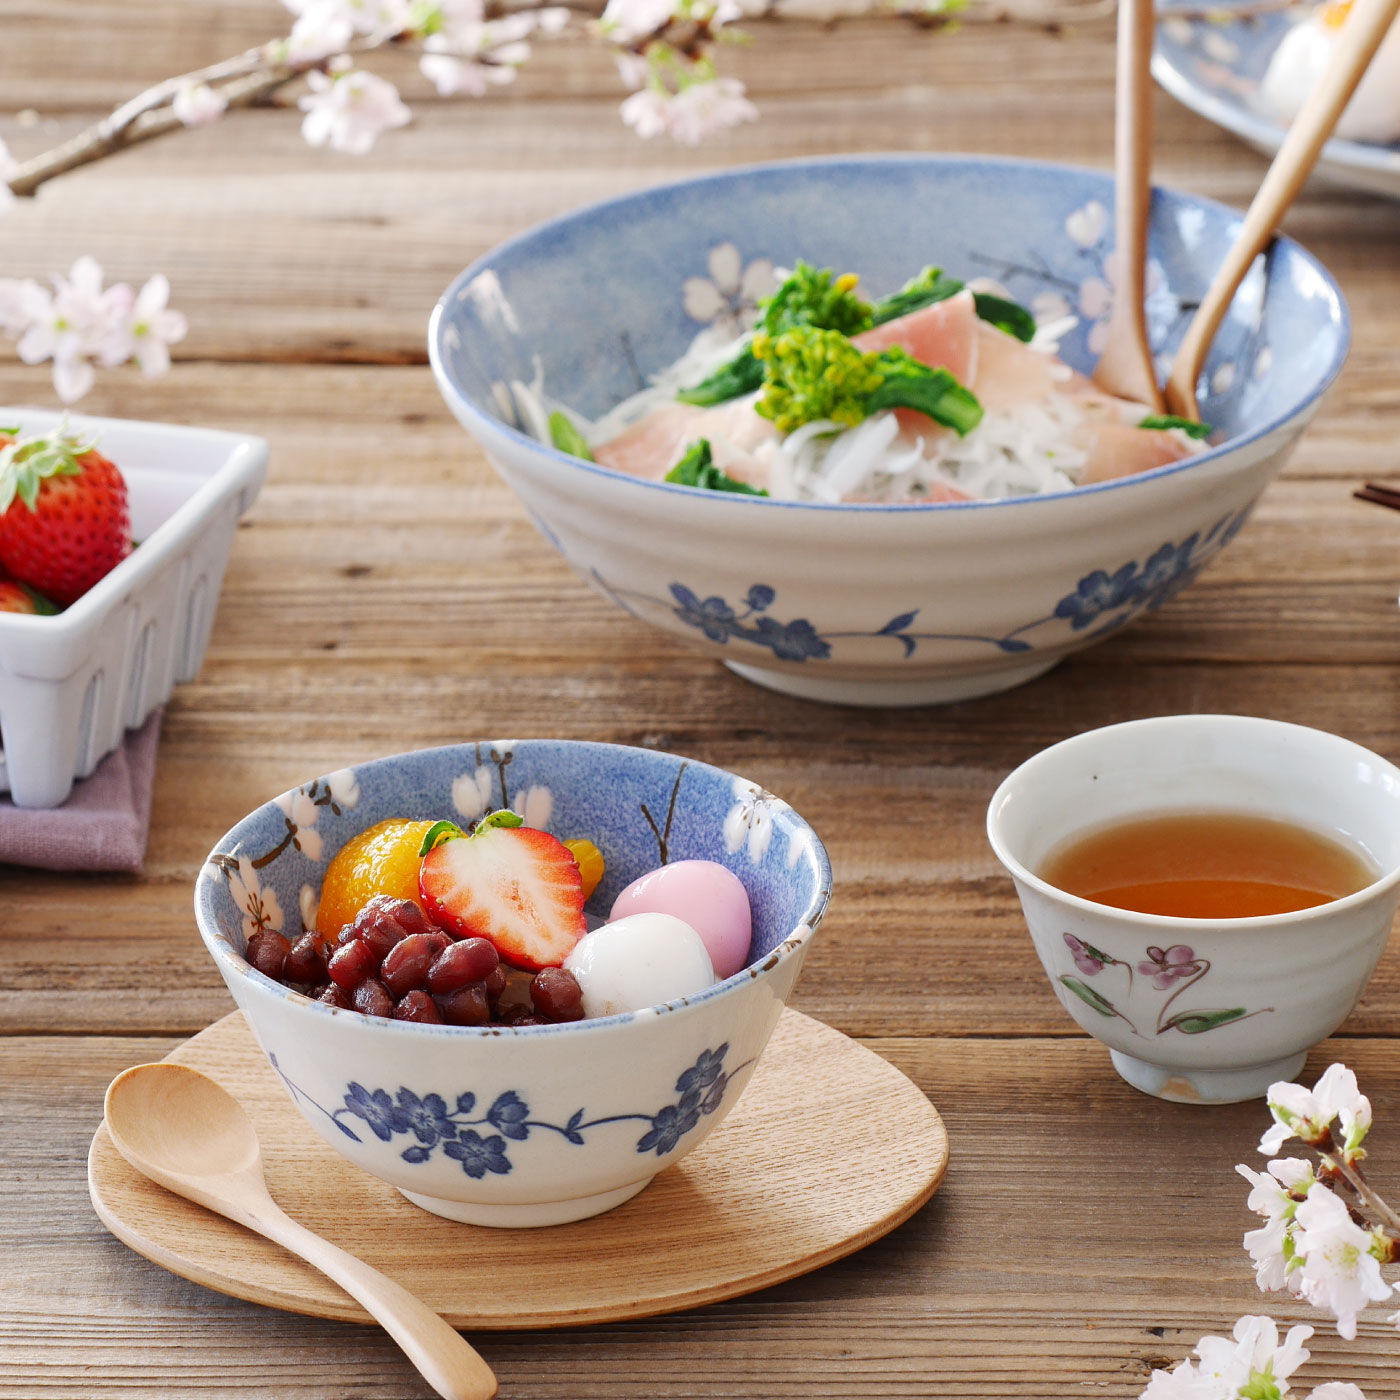 FELISSIMO PARTNERS | 青空いっぱいに富士桜の器麺鉢と茶碗セット